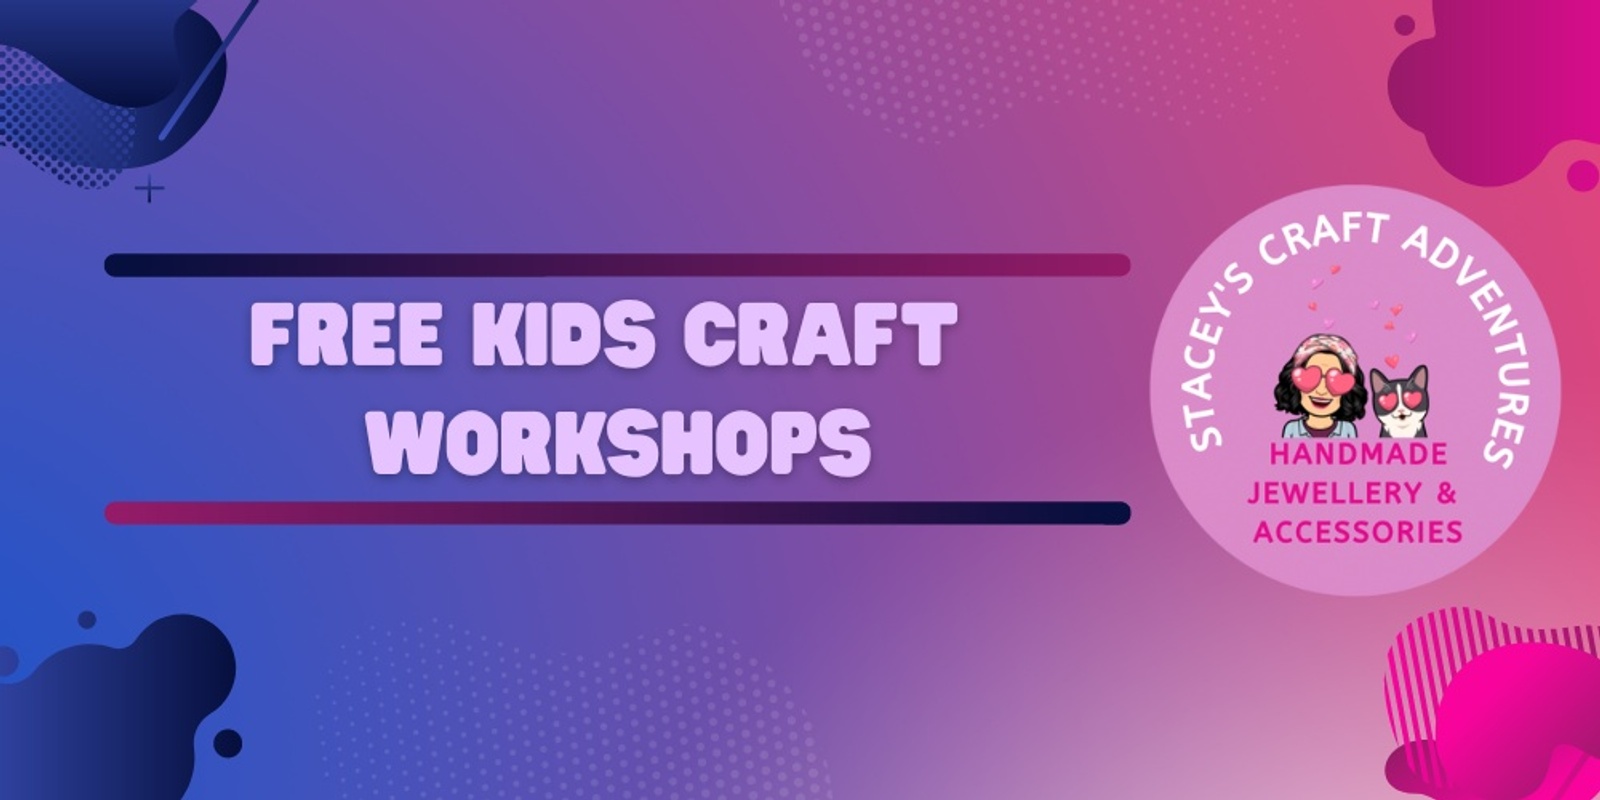 Free craft workshops